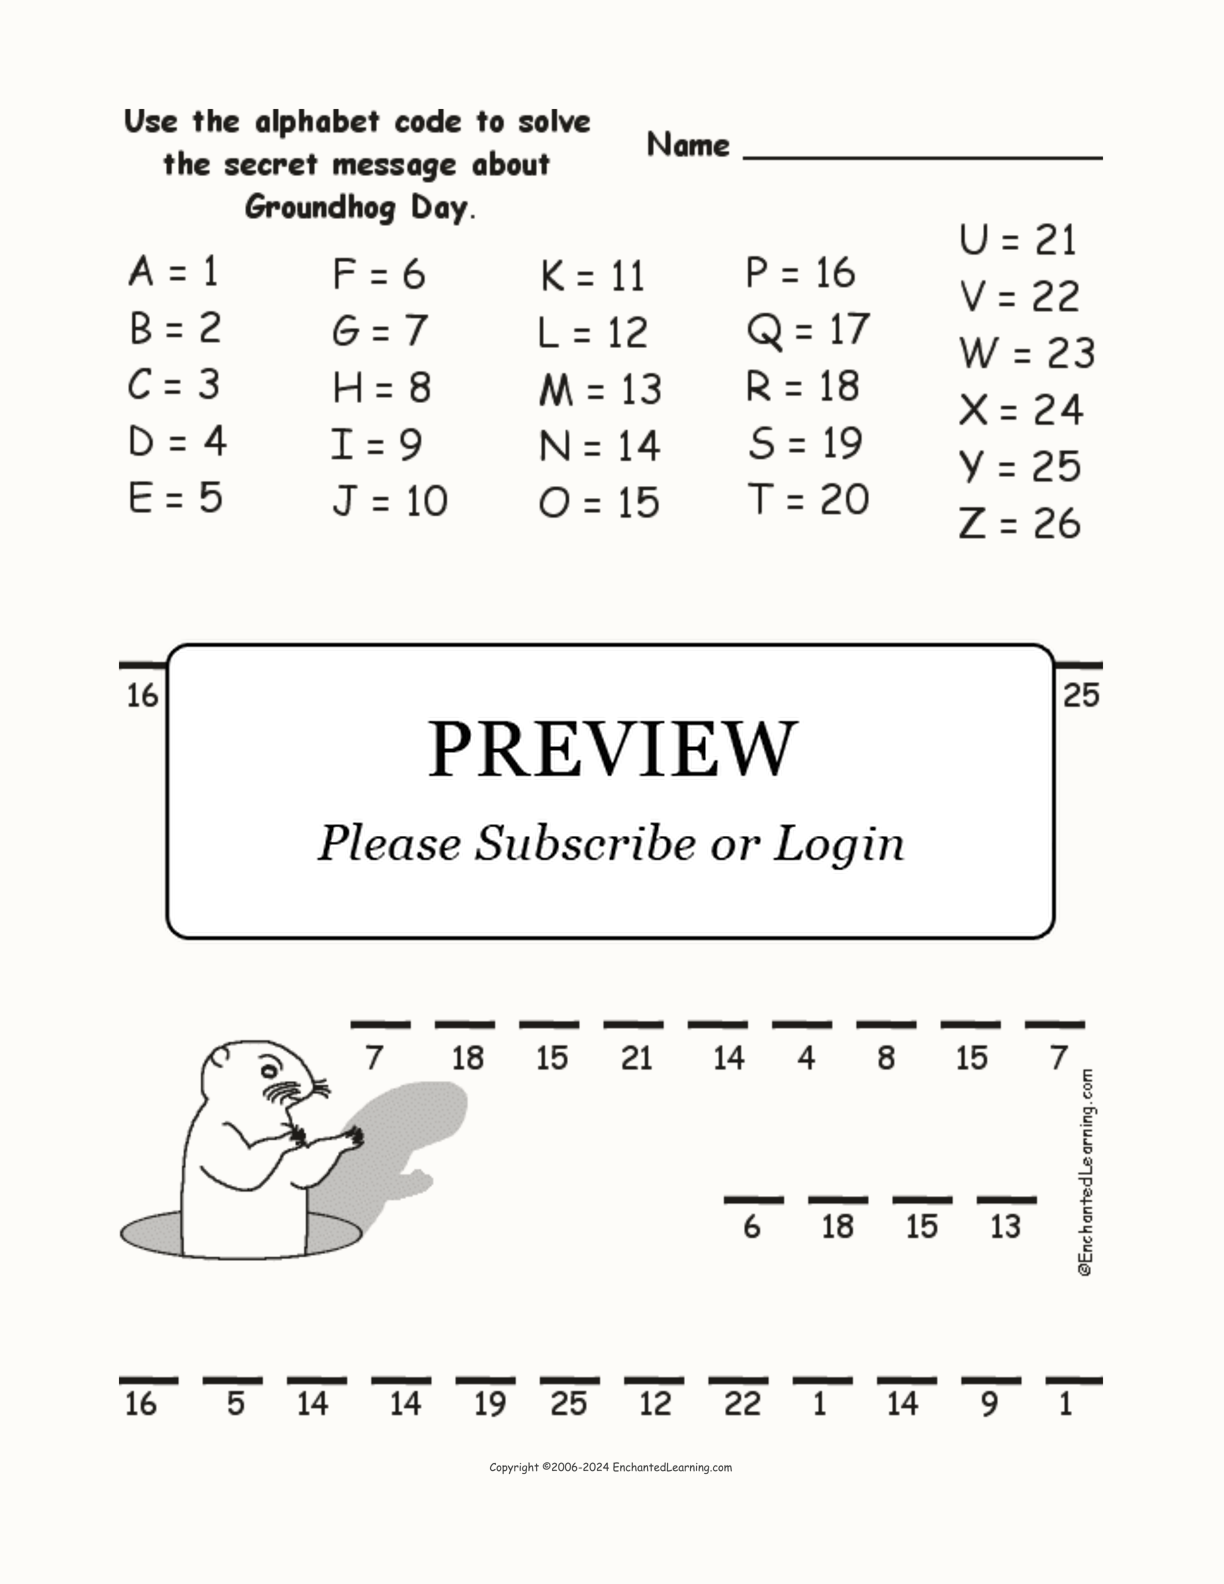 Groundhog Day Alphabet Code interactive worksheet page 1